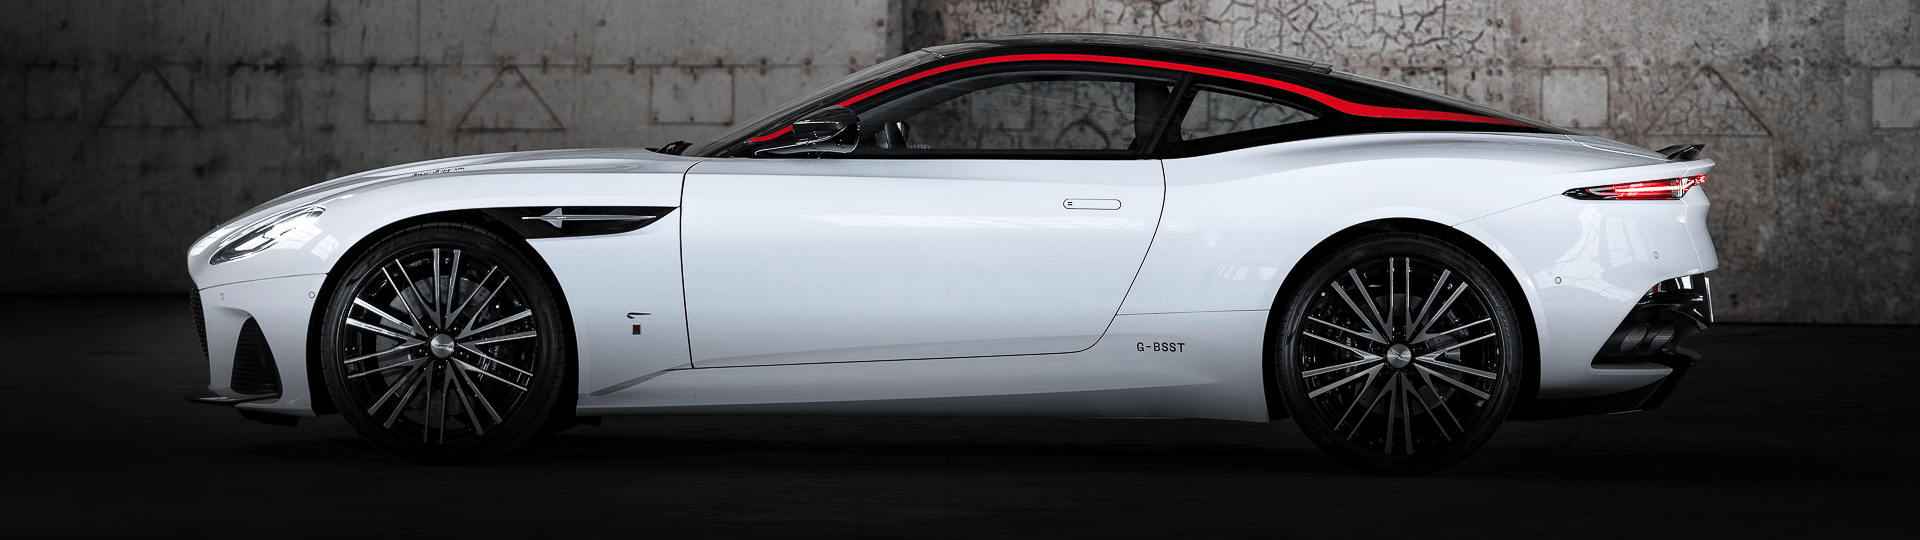 Unikátní Aston Martin DBS Superleggera Concorde Edition ve fondu Engine Classic Cars